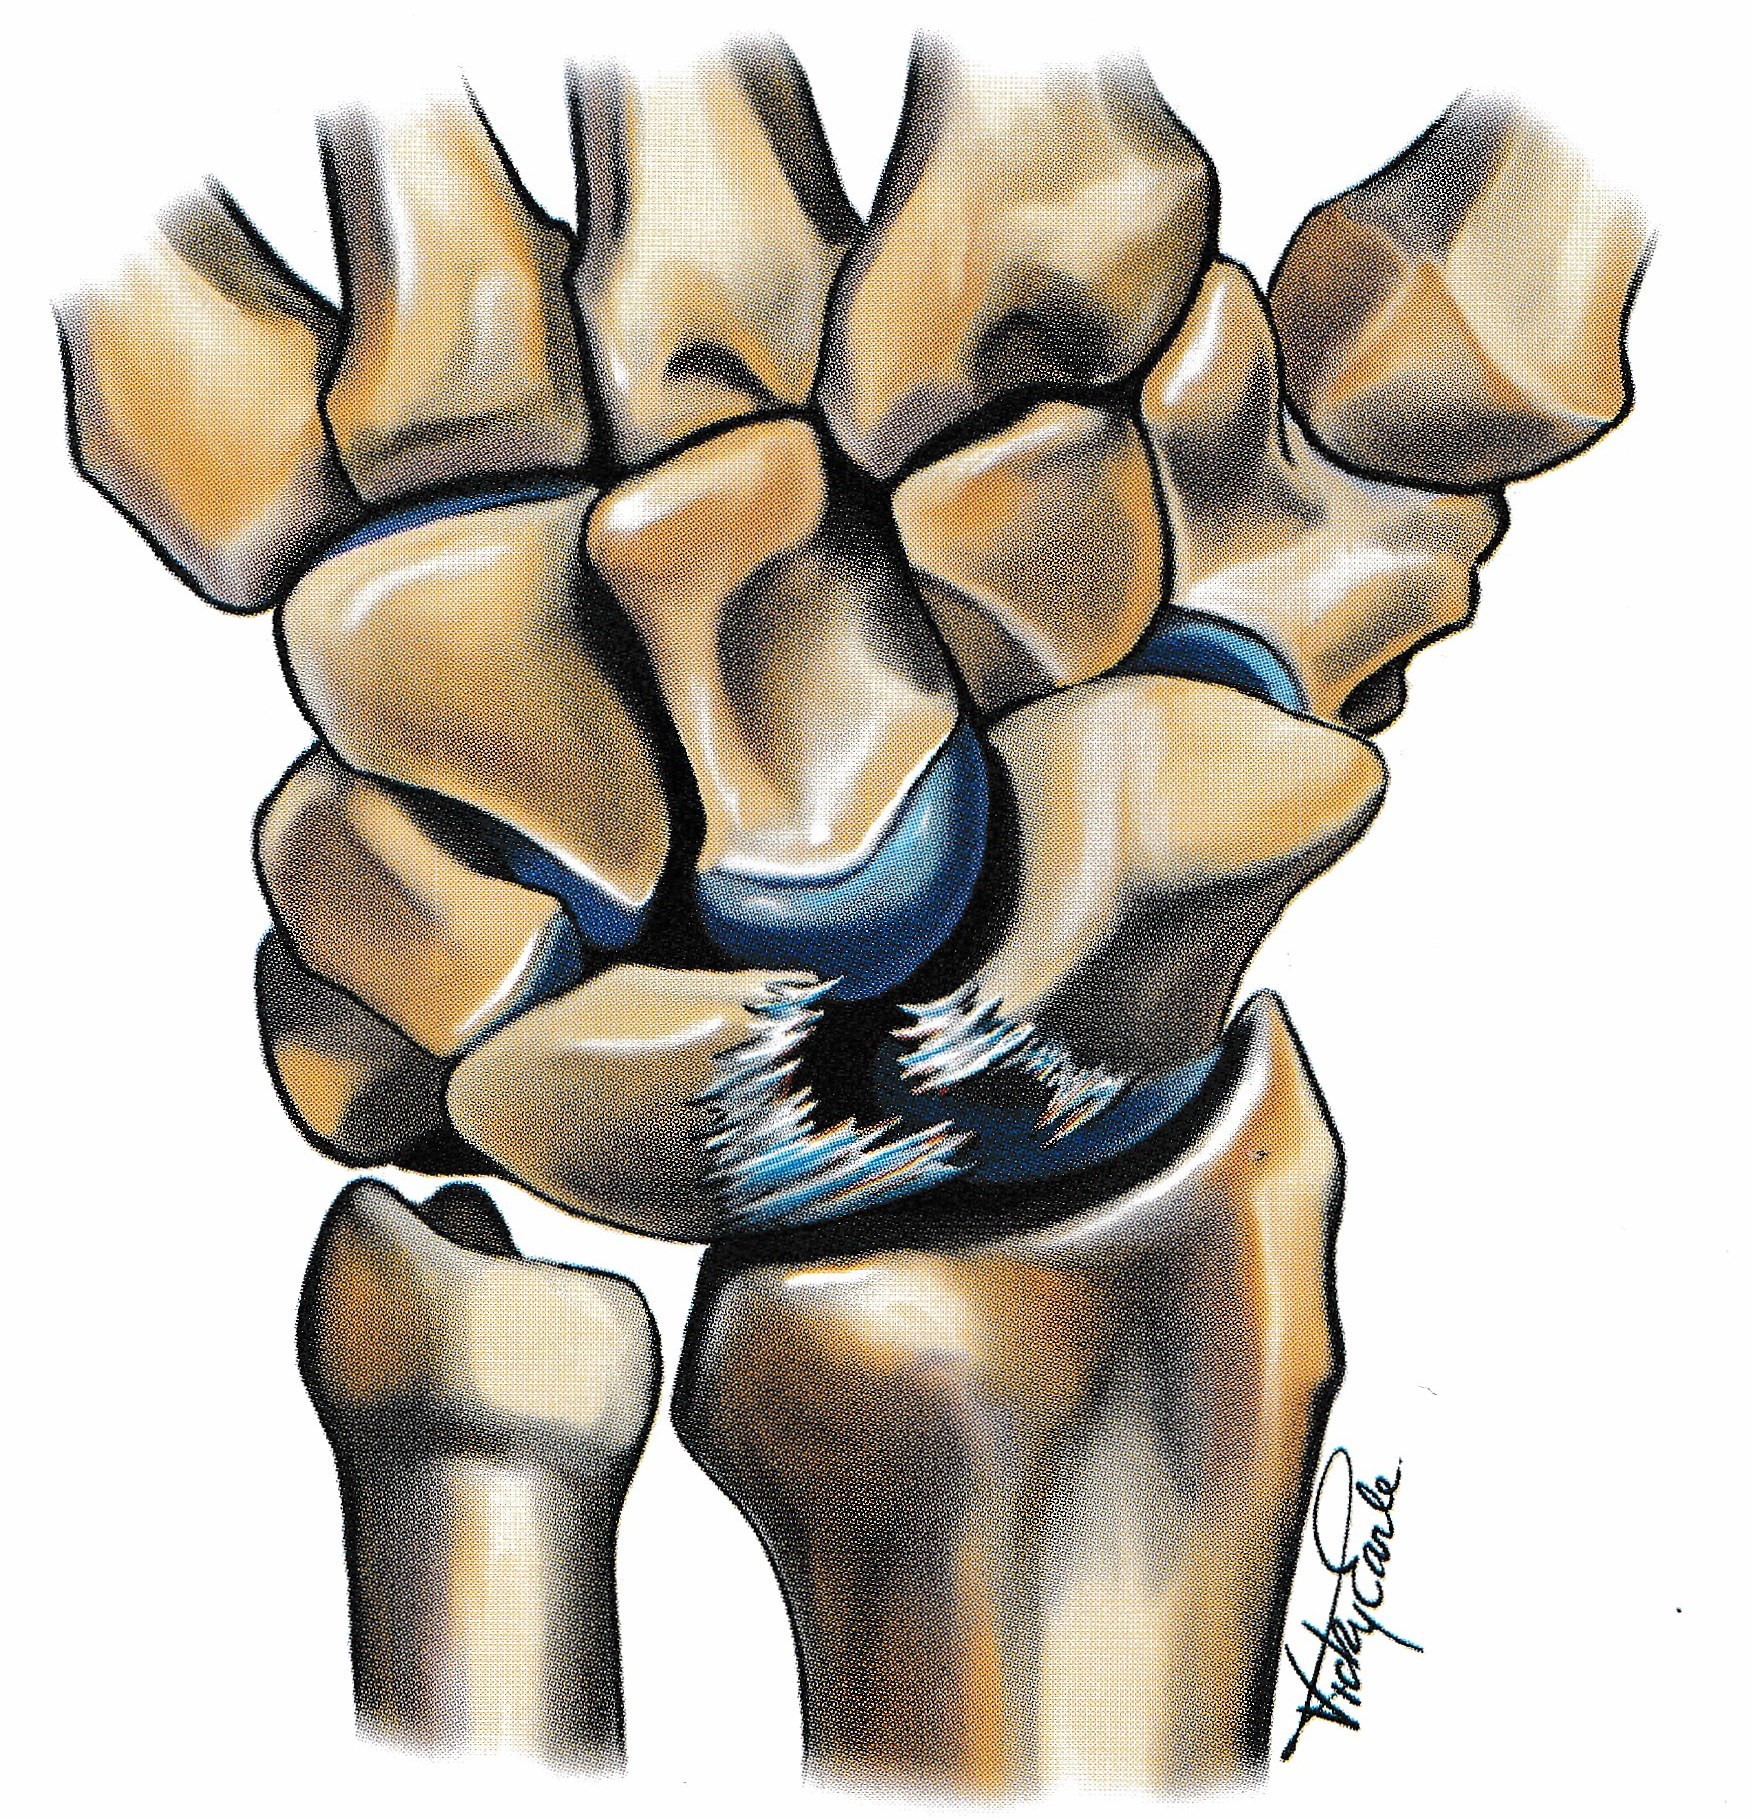 Wrist Pain:  Part 2 - Traumatic and Overuse Wrist Conditons